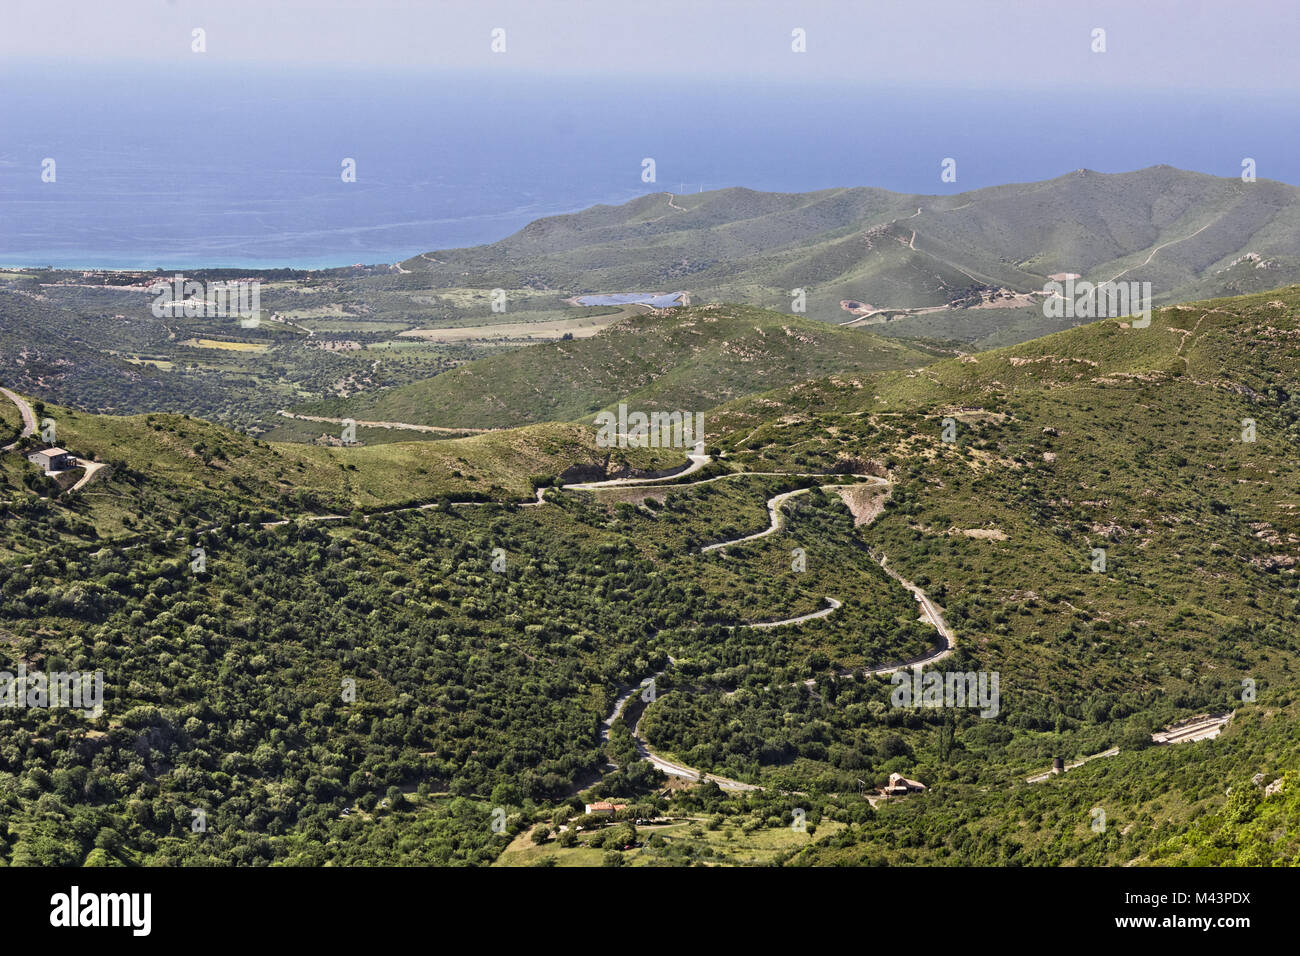 Palasca, mountain village in the Nebbio, Corsica Stock Photo